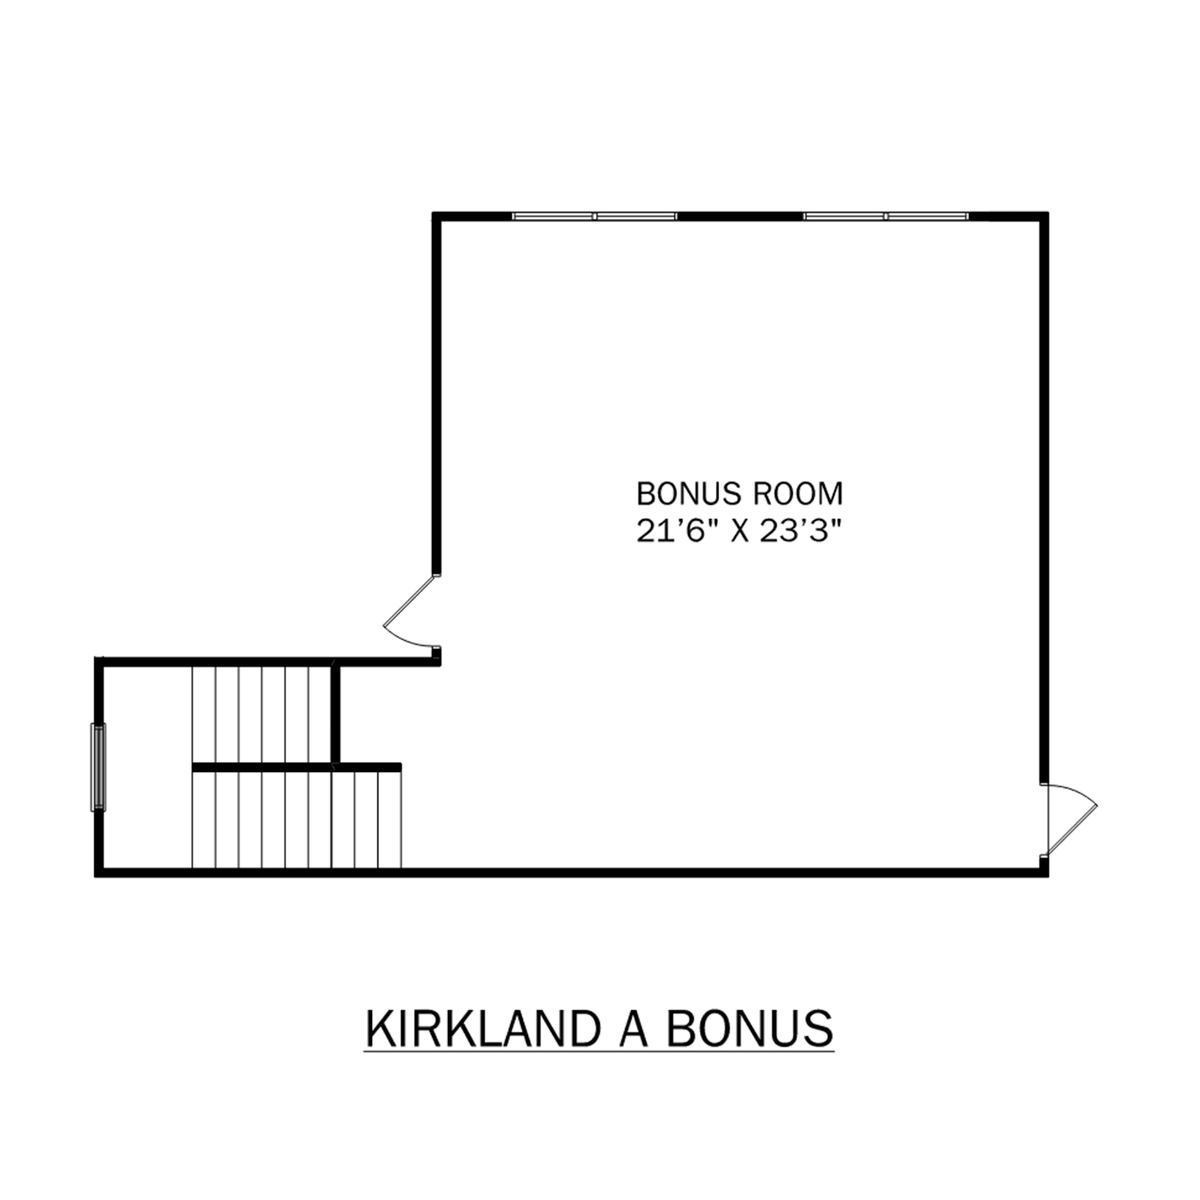 2 - The Kirkland with Bonus buildable floor plan layout in Davidson Homes' Creekside community.